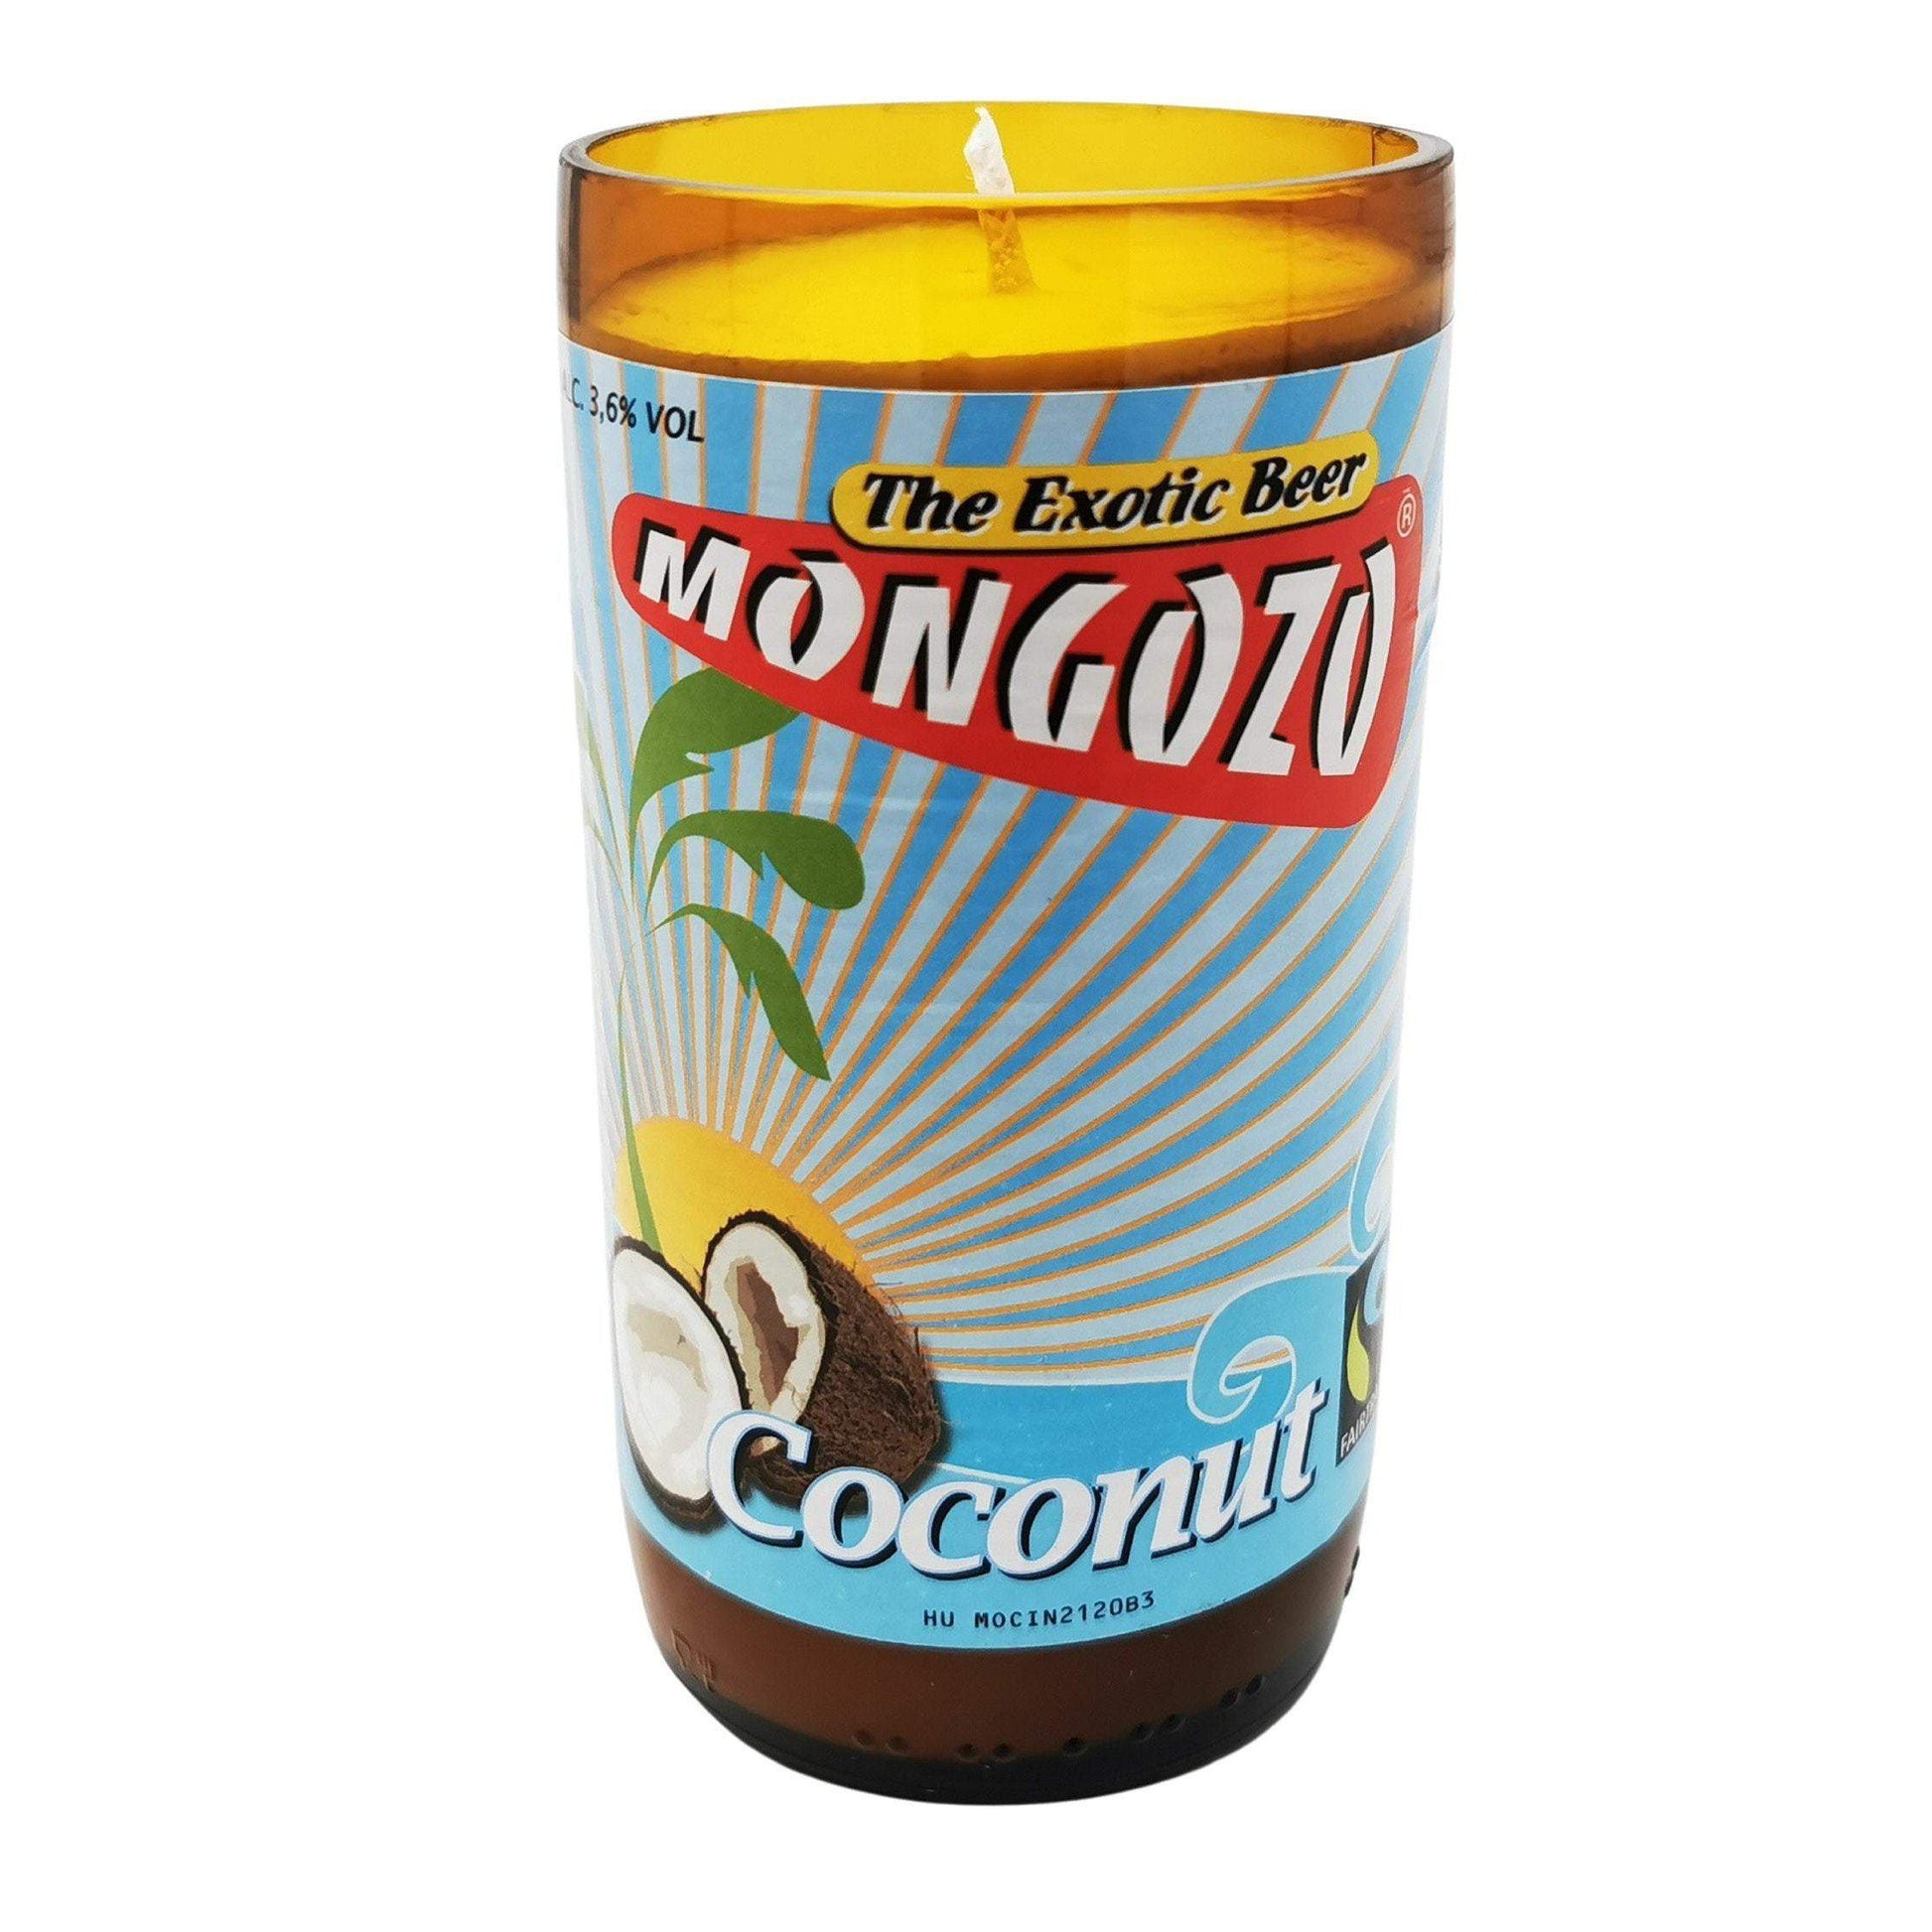 Mongozo Coconut Beer Bottle Candle Beer & Ale Bottle Candles Adhock Homeware